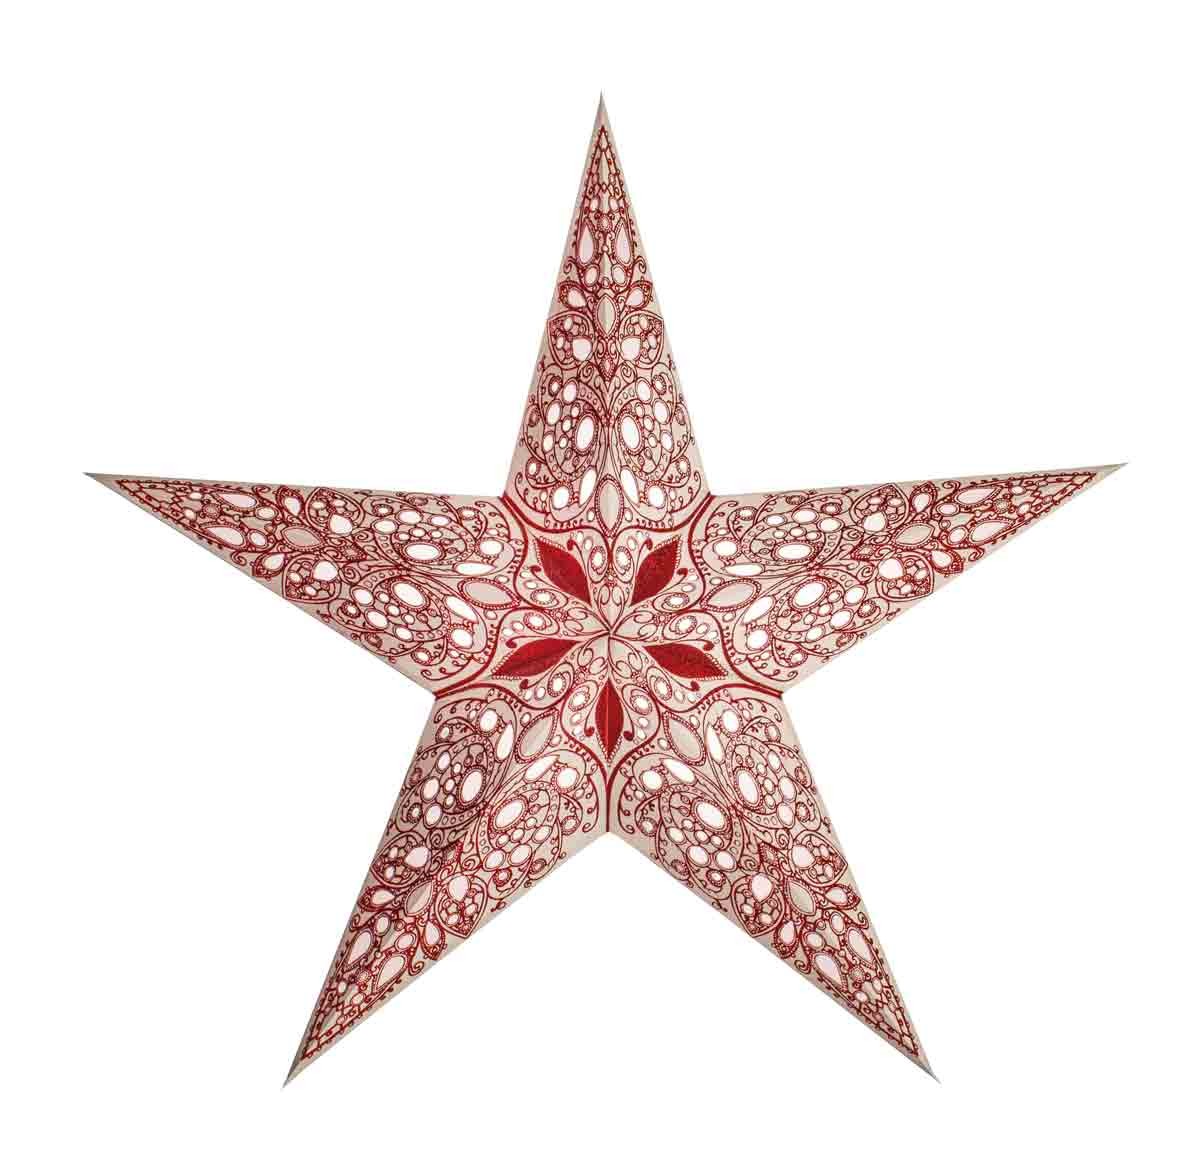 Papierstern starlightz raja red size M